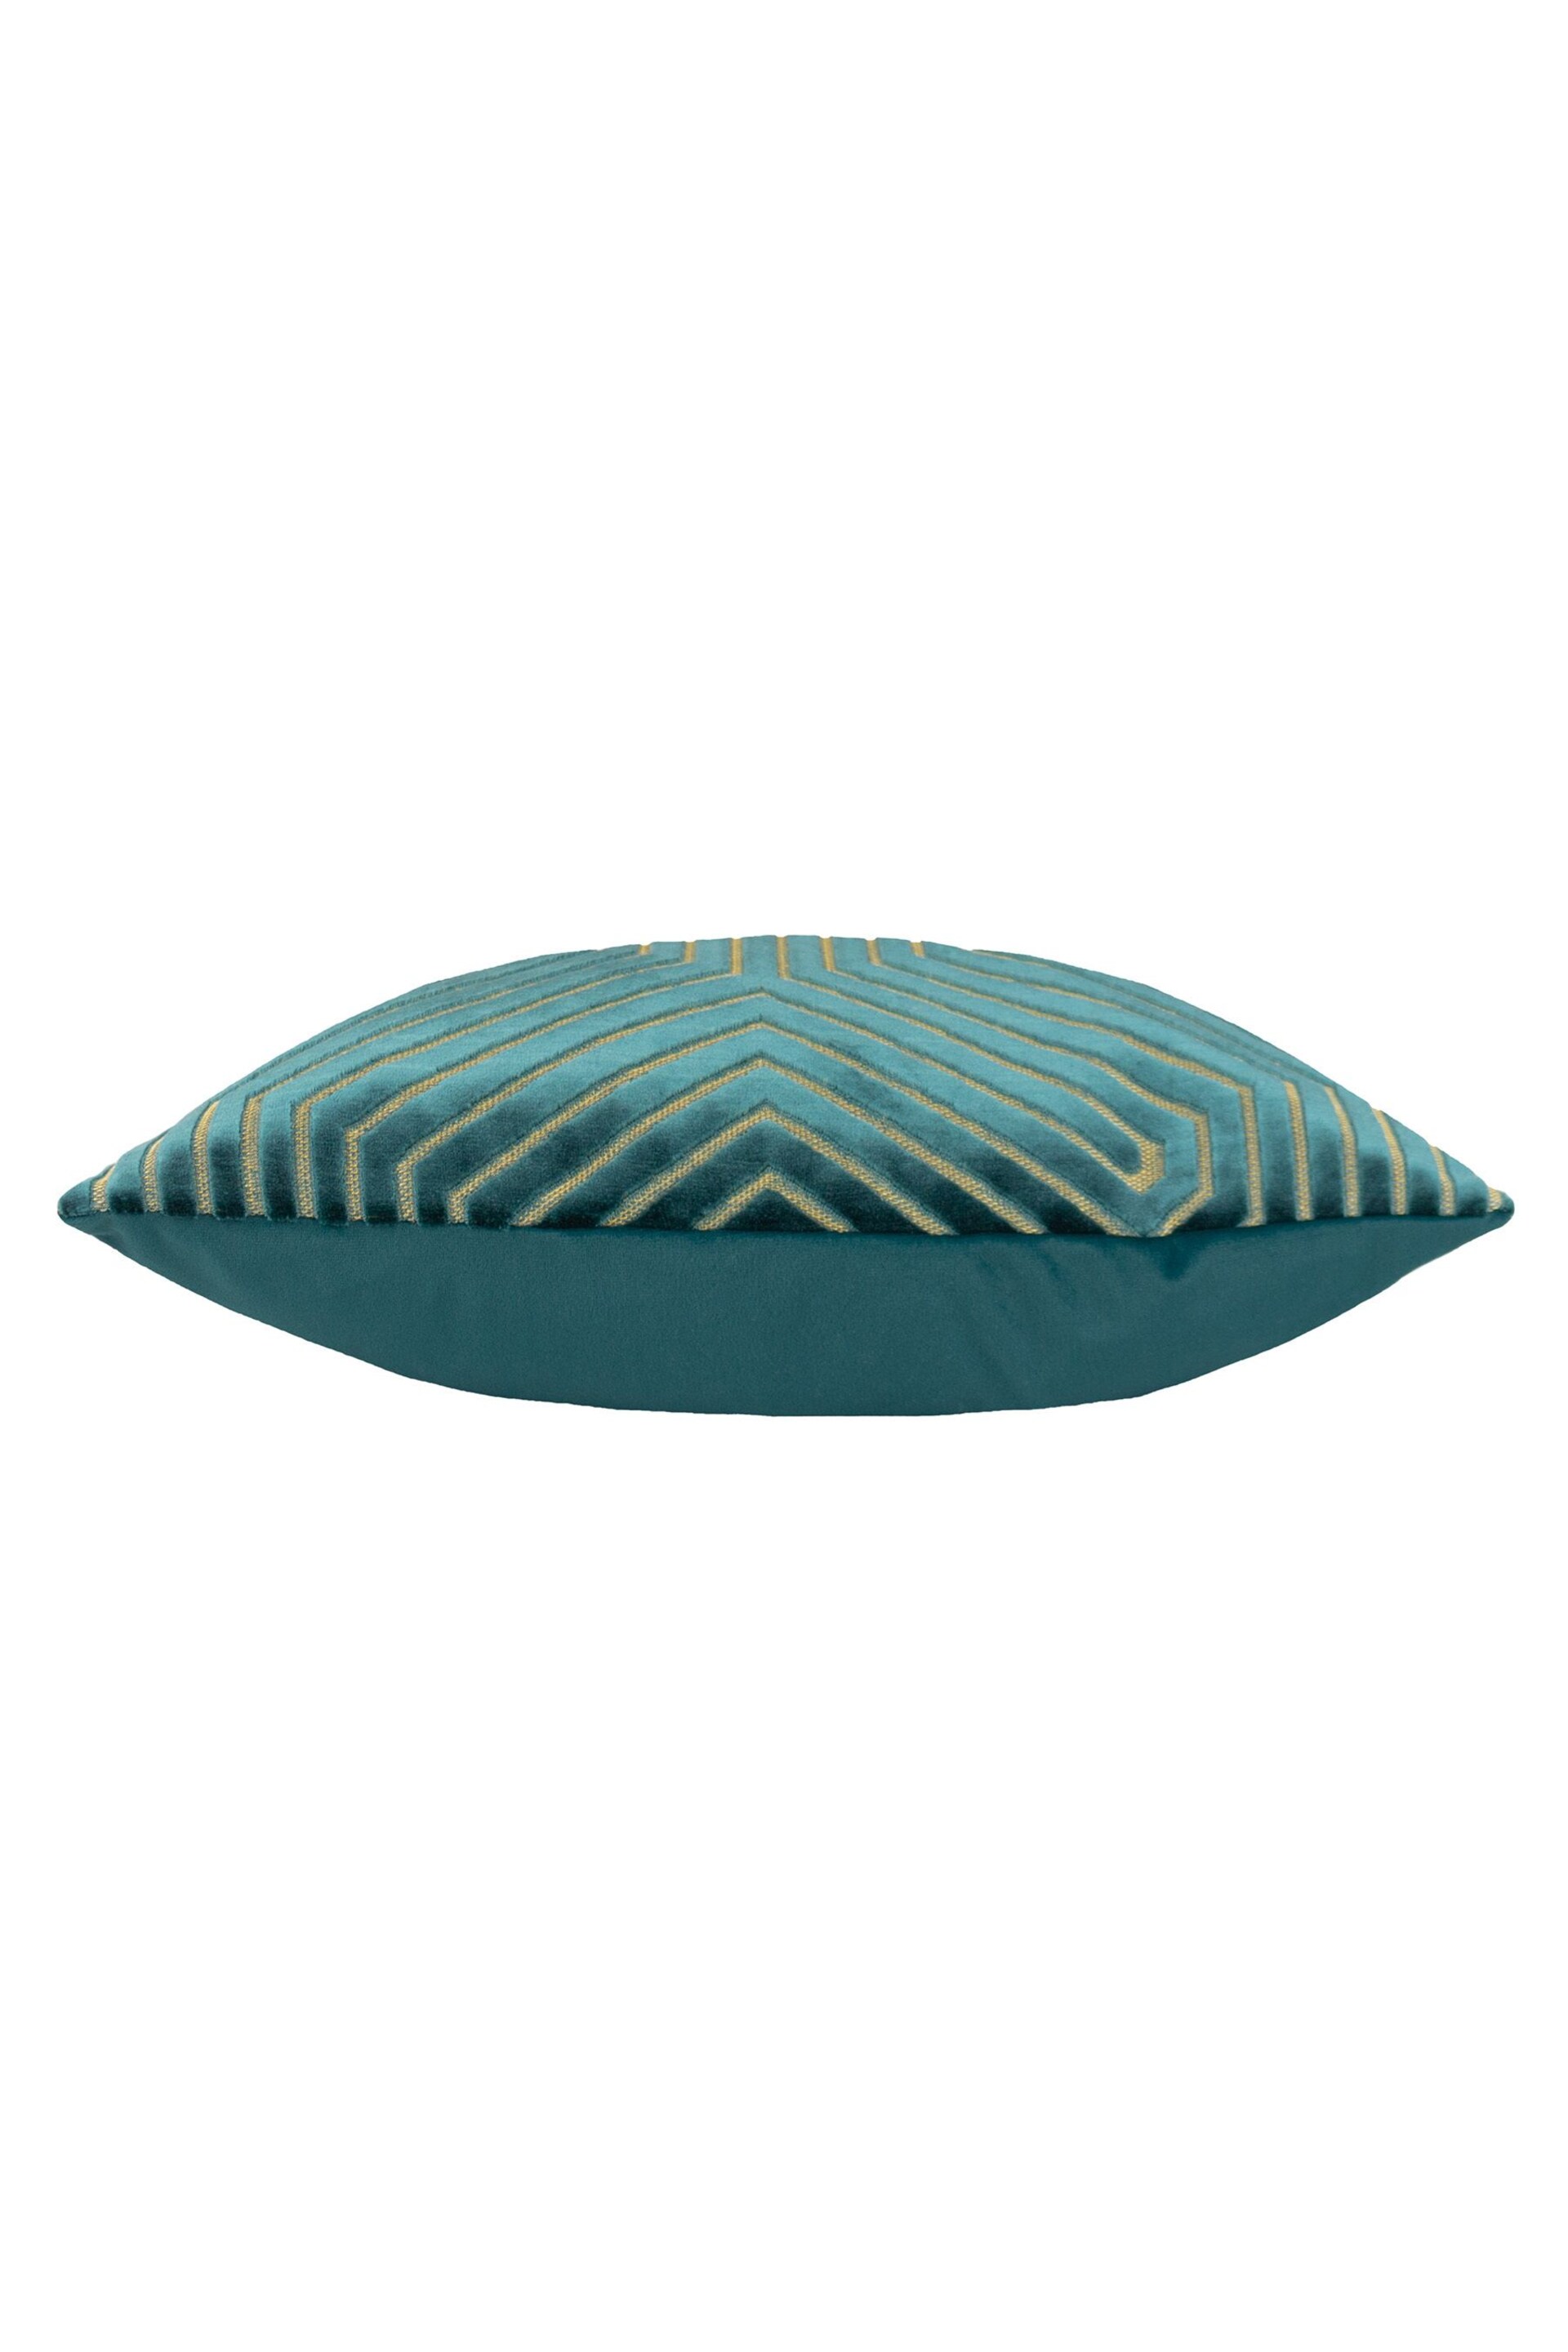 Riva Paoletti 2 Pack Teal Blue Evoke Geometric Cut Velvet Cushions - Image 3 of 5